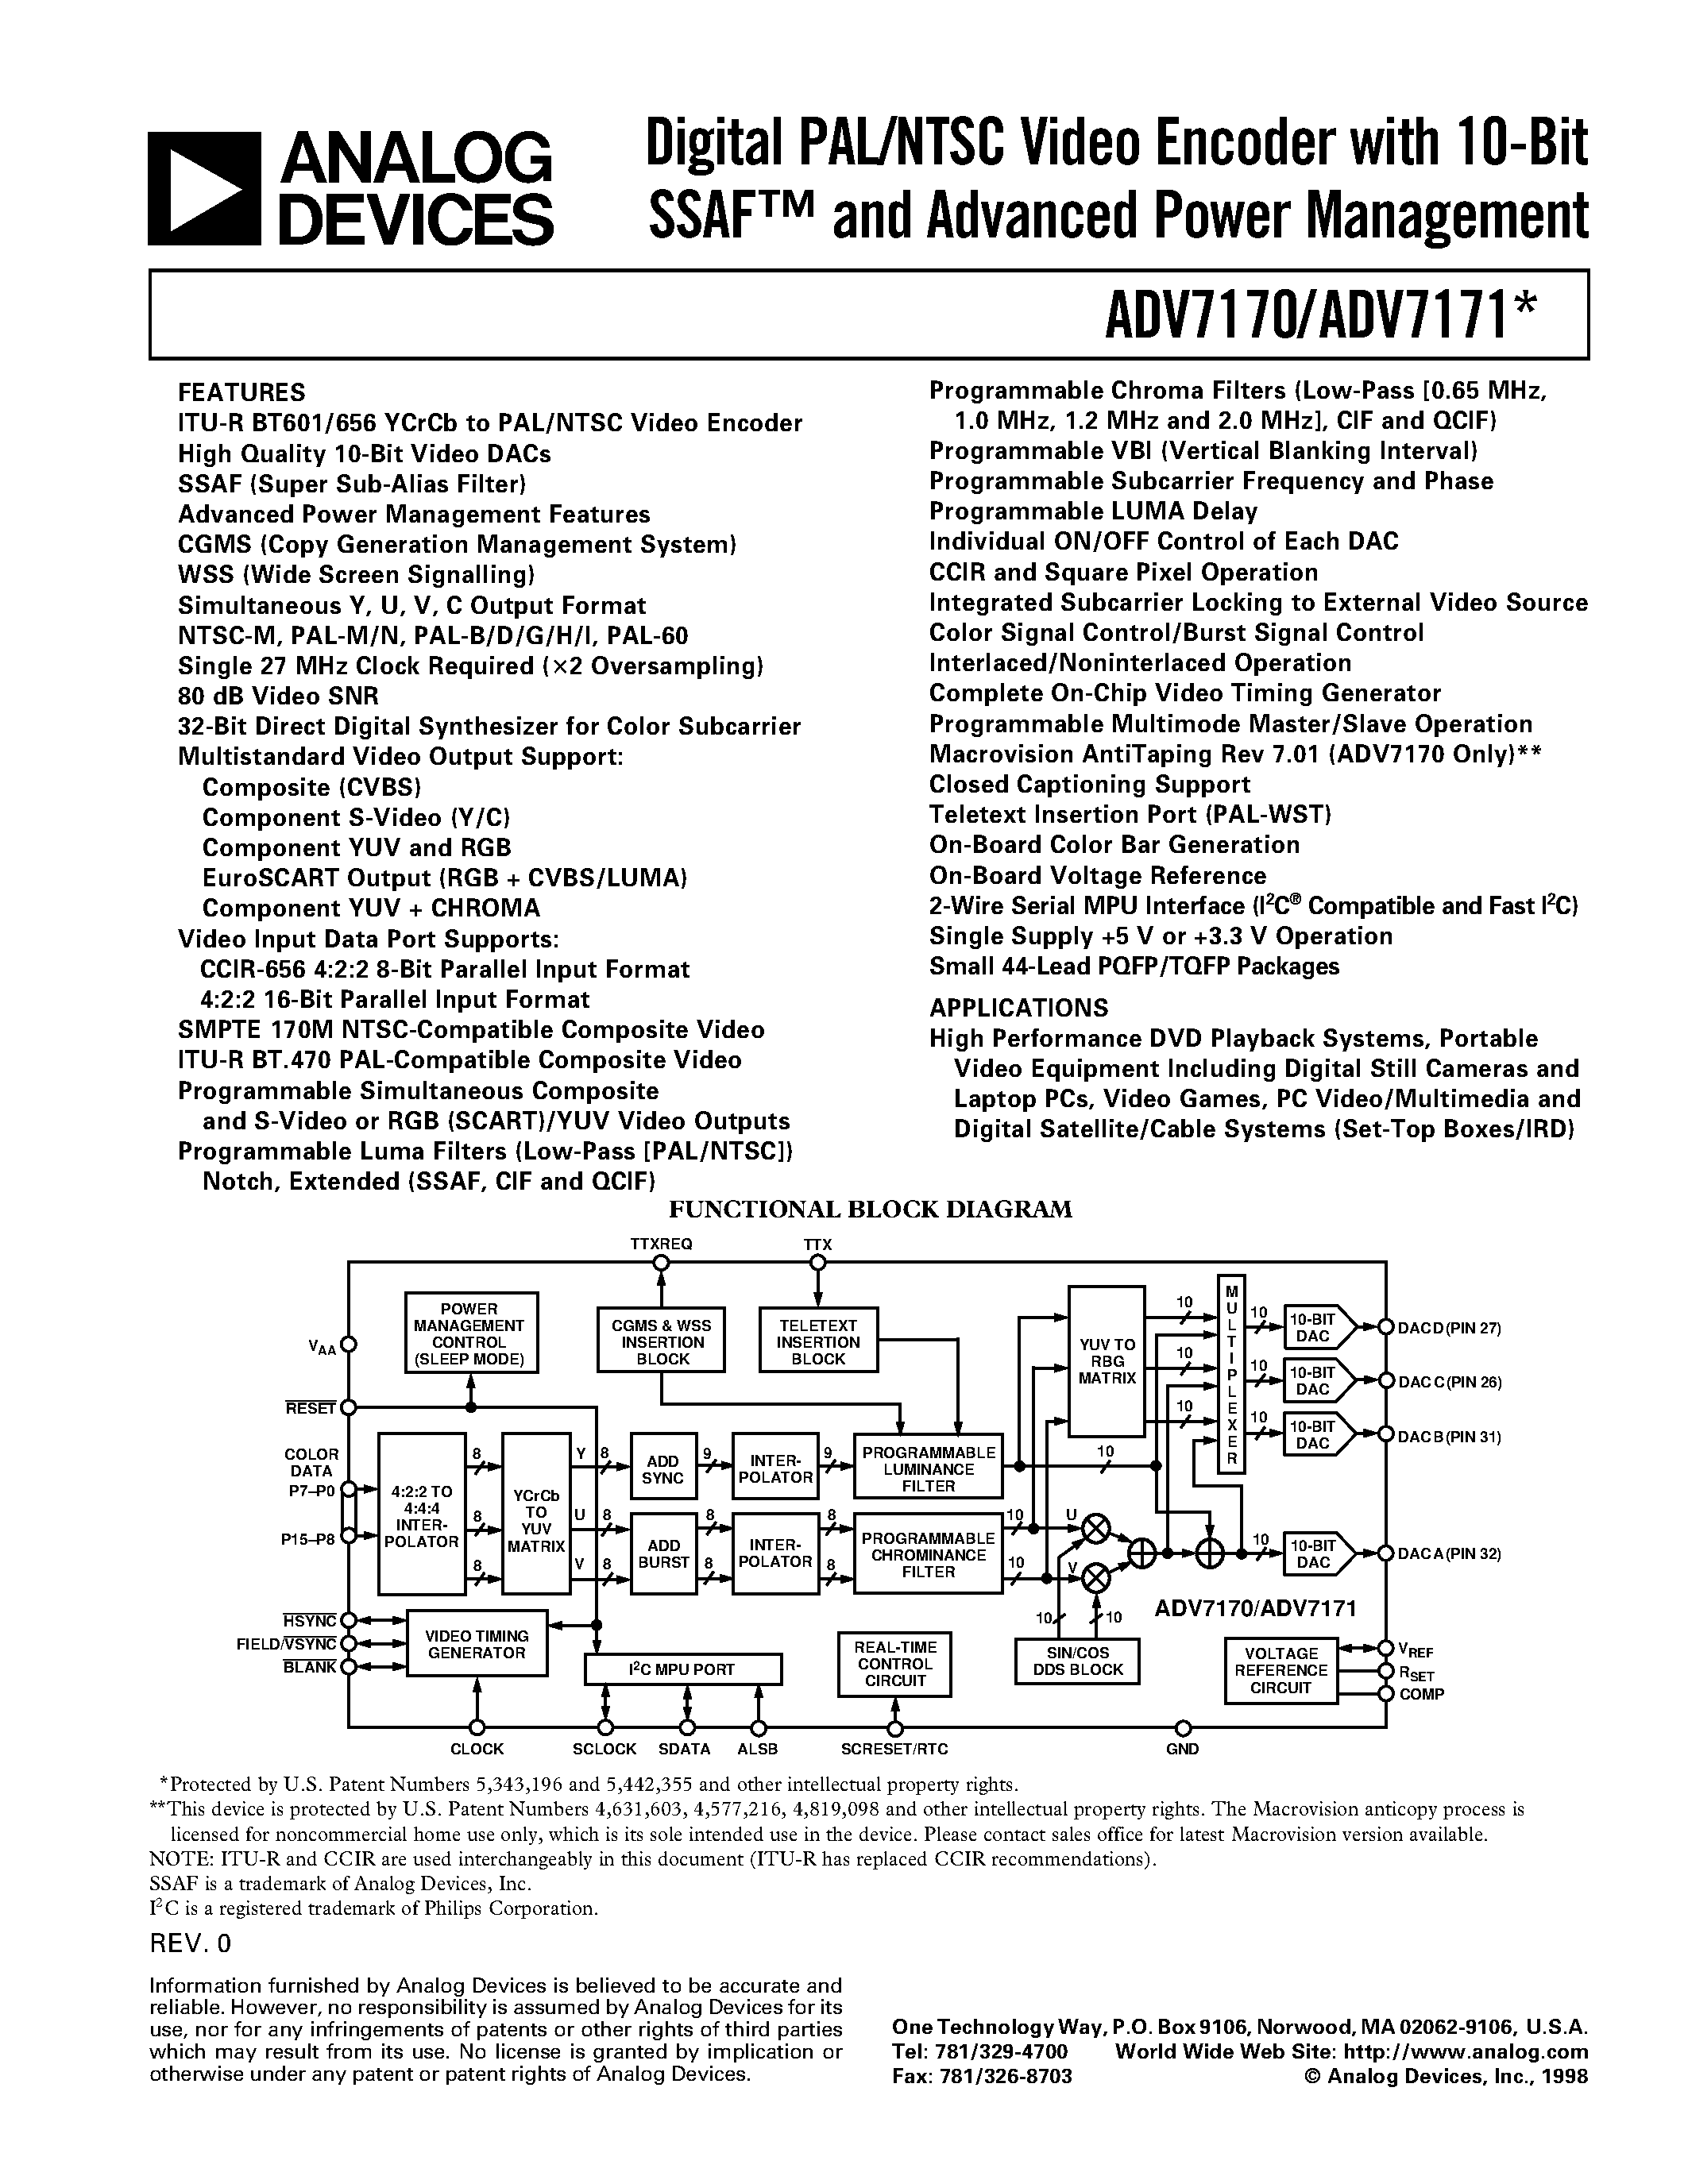 Datasheet ADV7171KS - Digital PAL/NTSC Video Encoder with 10-Bit SSAF and Advanced Power Management page 1